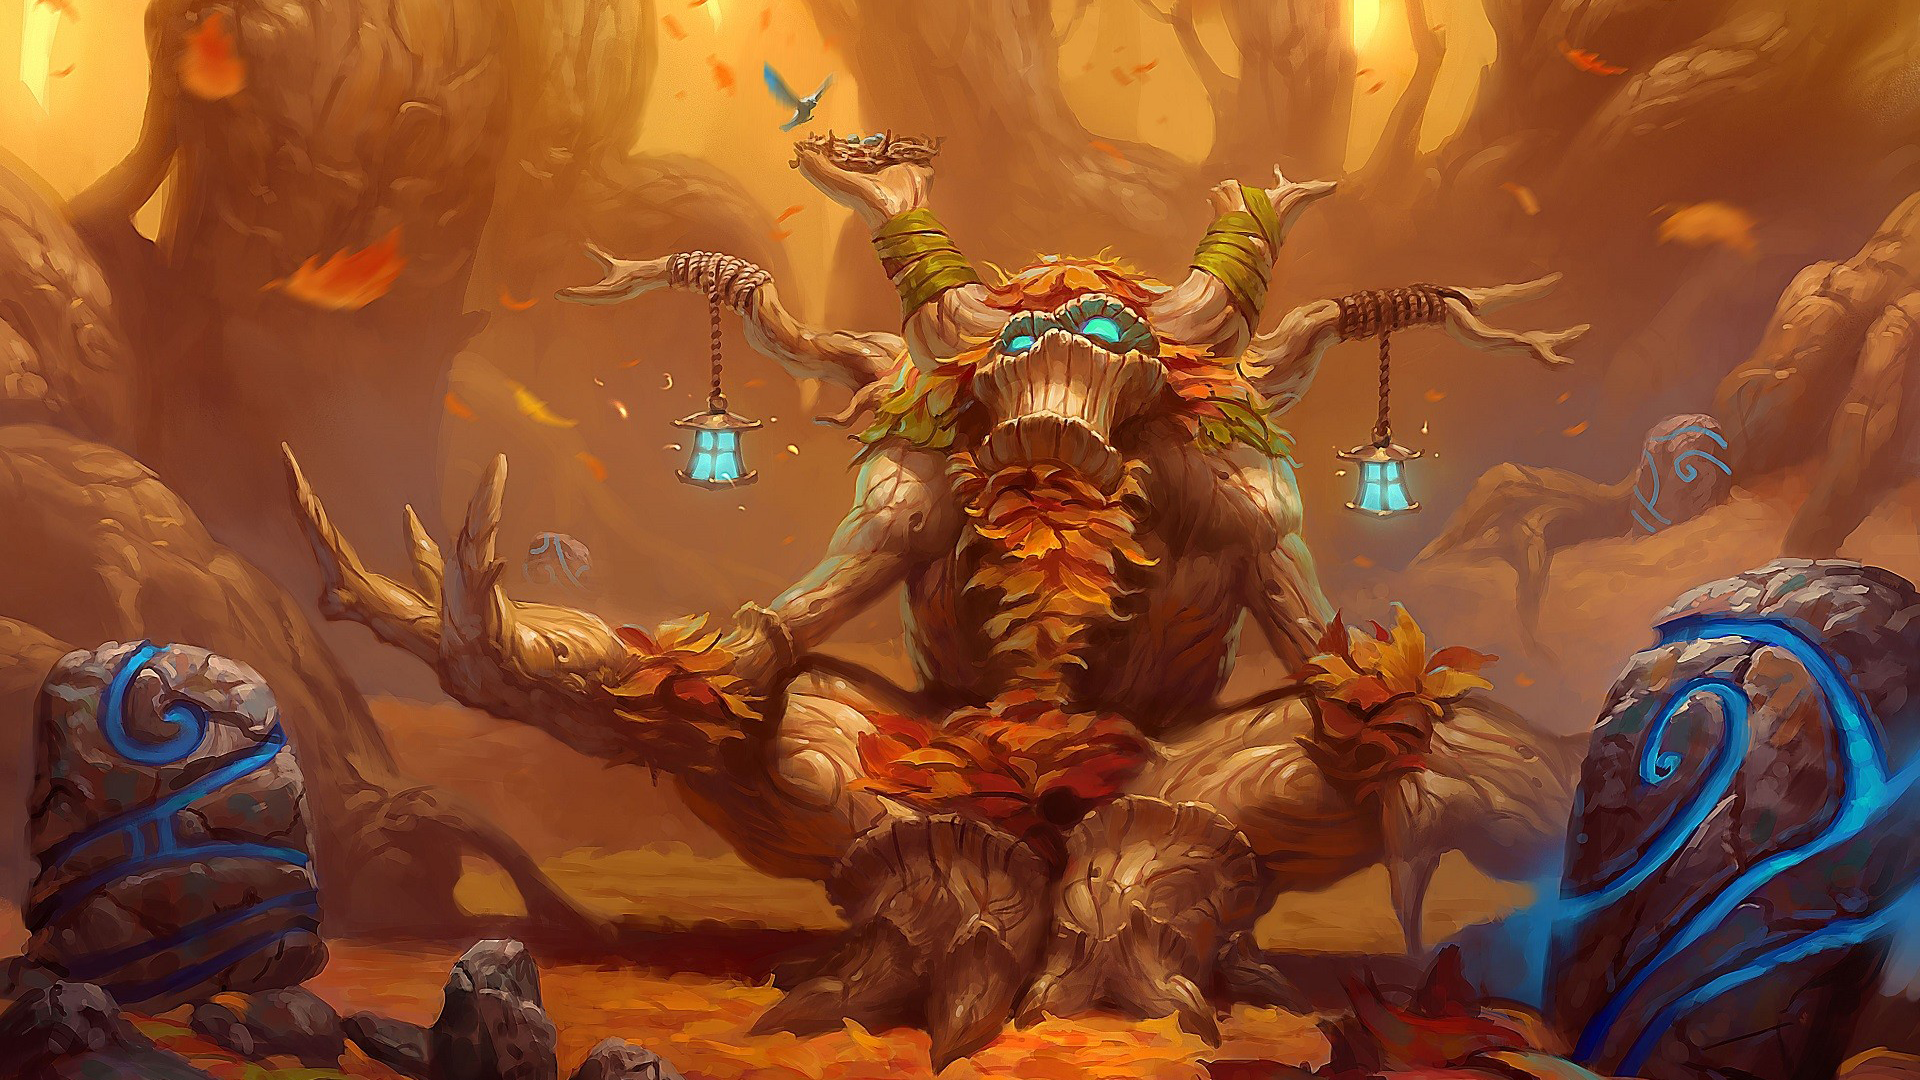 General 1920x1080 Hearthstone World of Warcraft PC gaming fantasy art trees stones glowing eyes